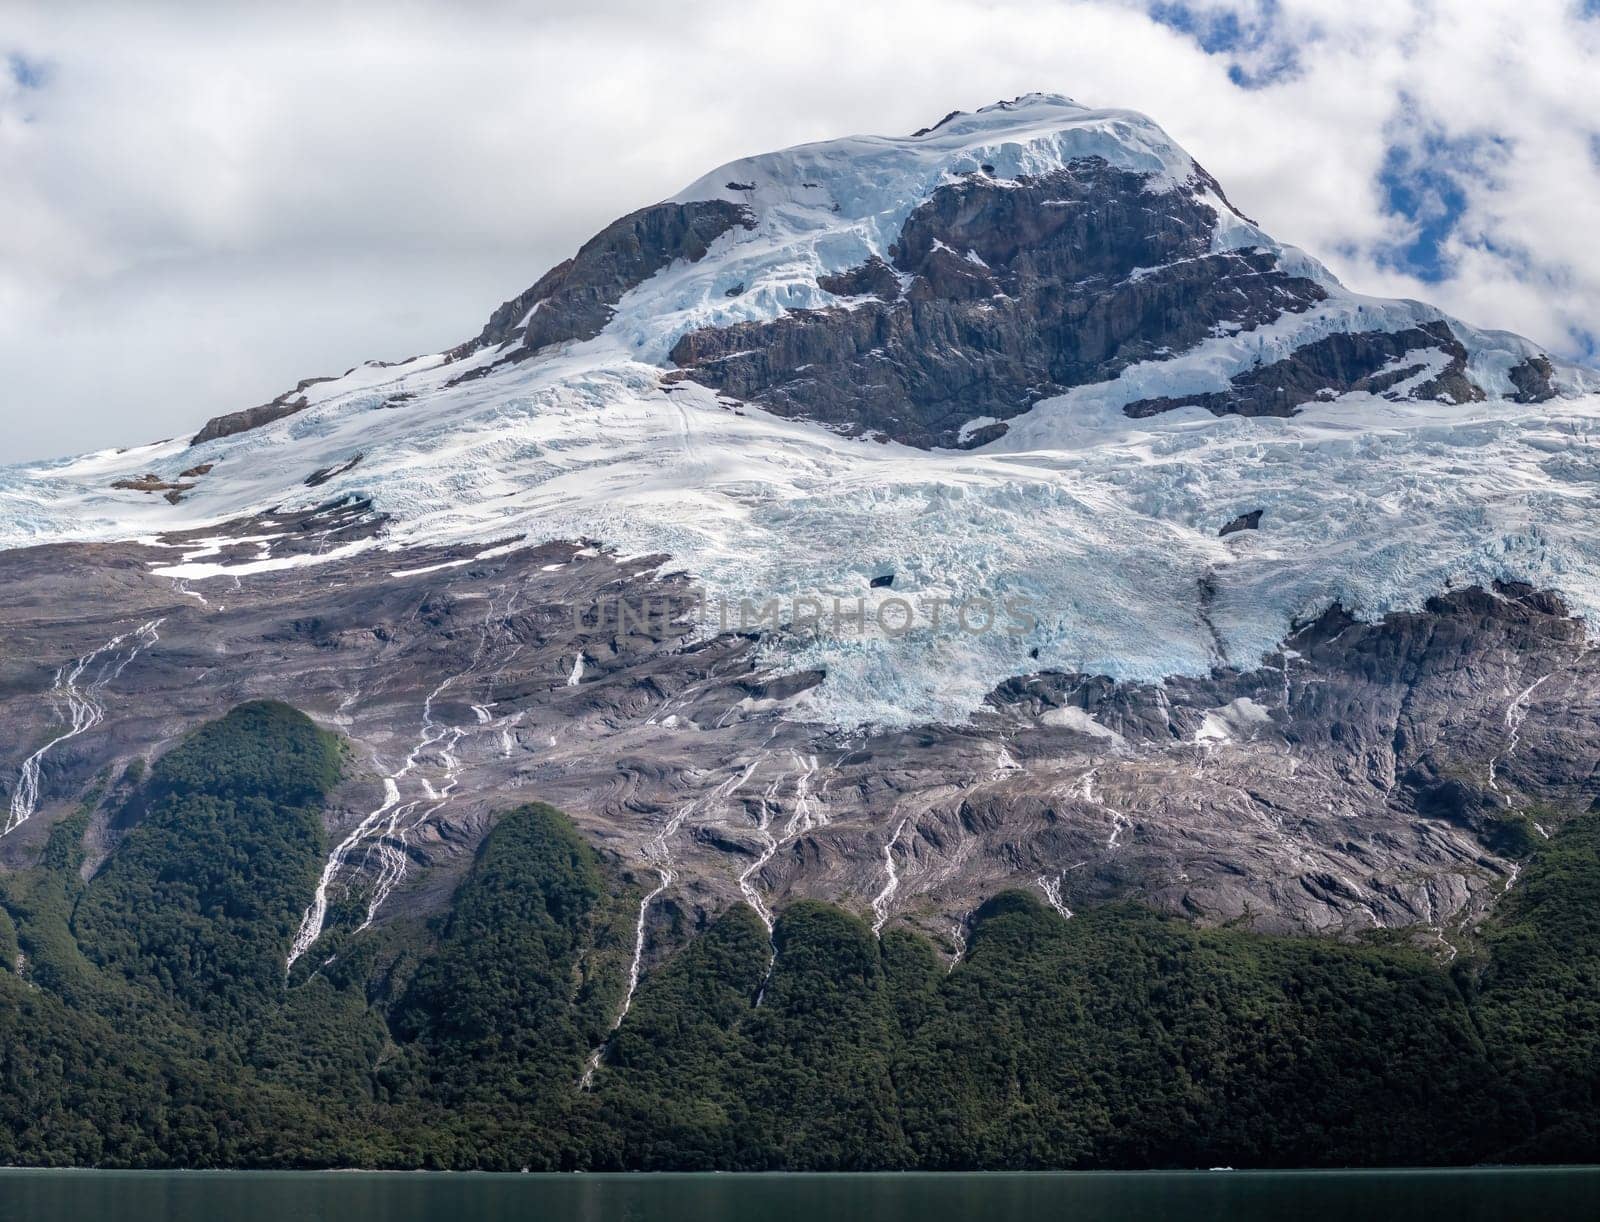 Glacier flows down a mountain into a peaceful lake.